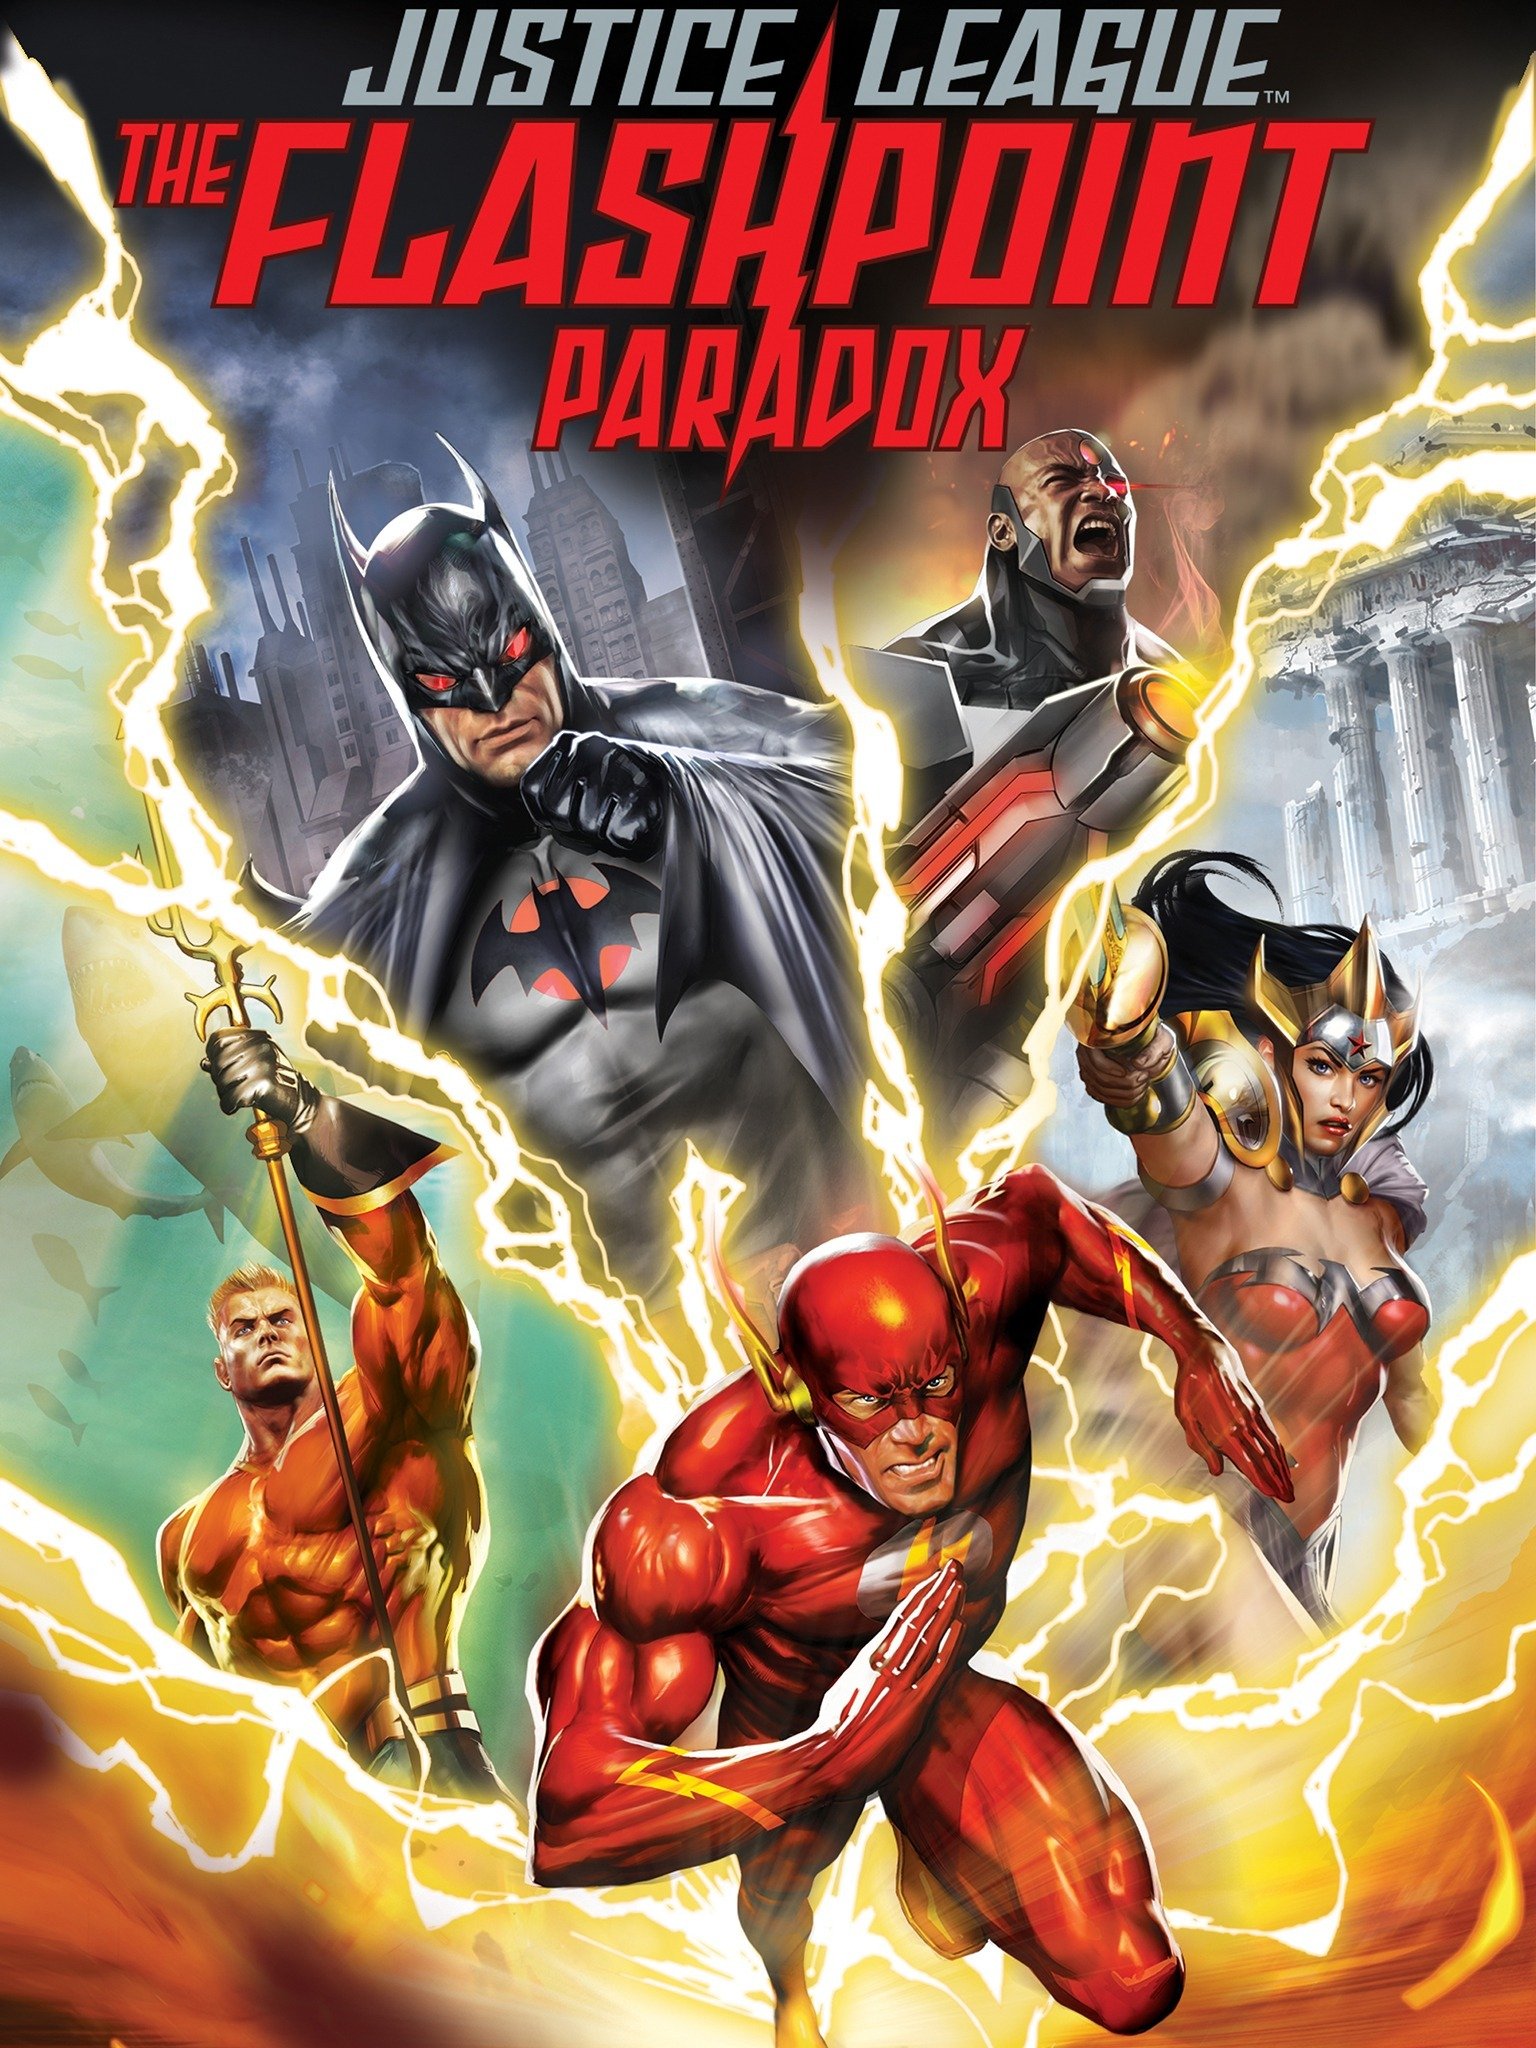 Justice League Unlimited (TV Series 2004–2006) - IMDb